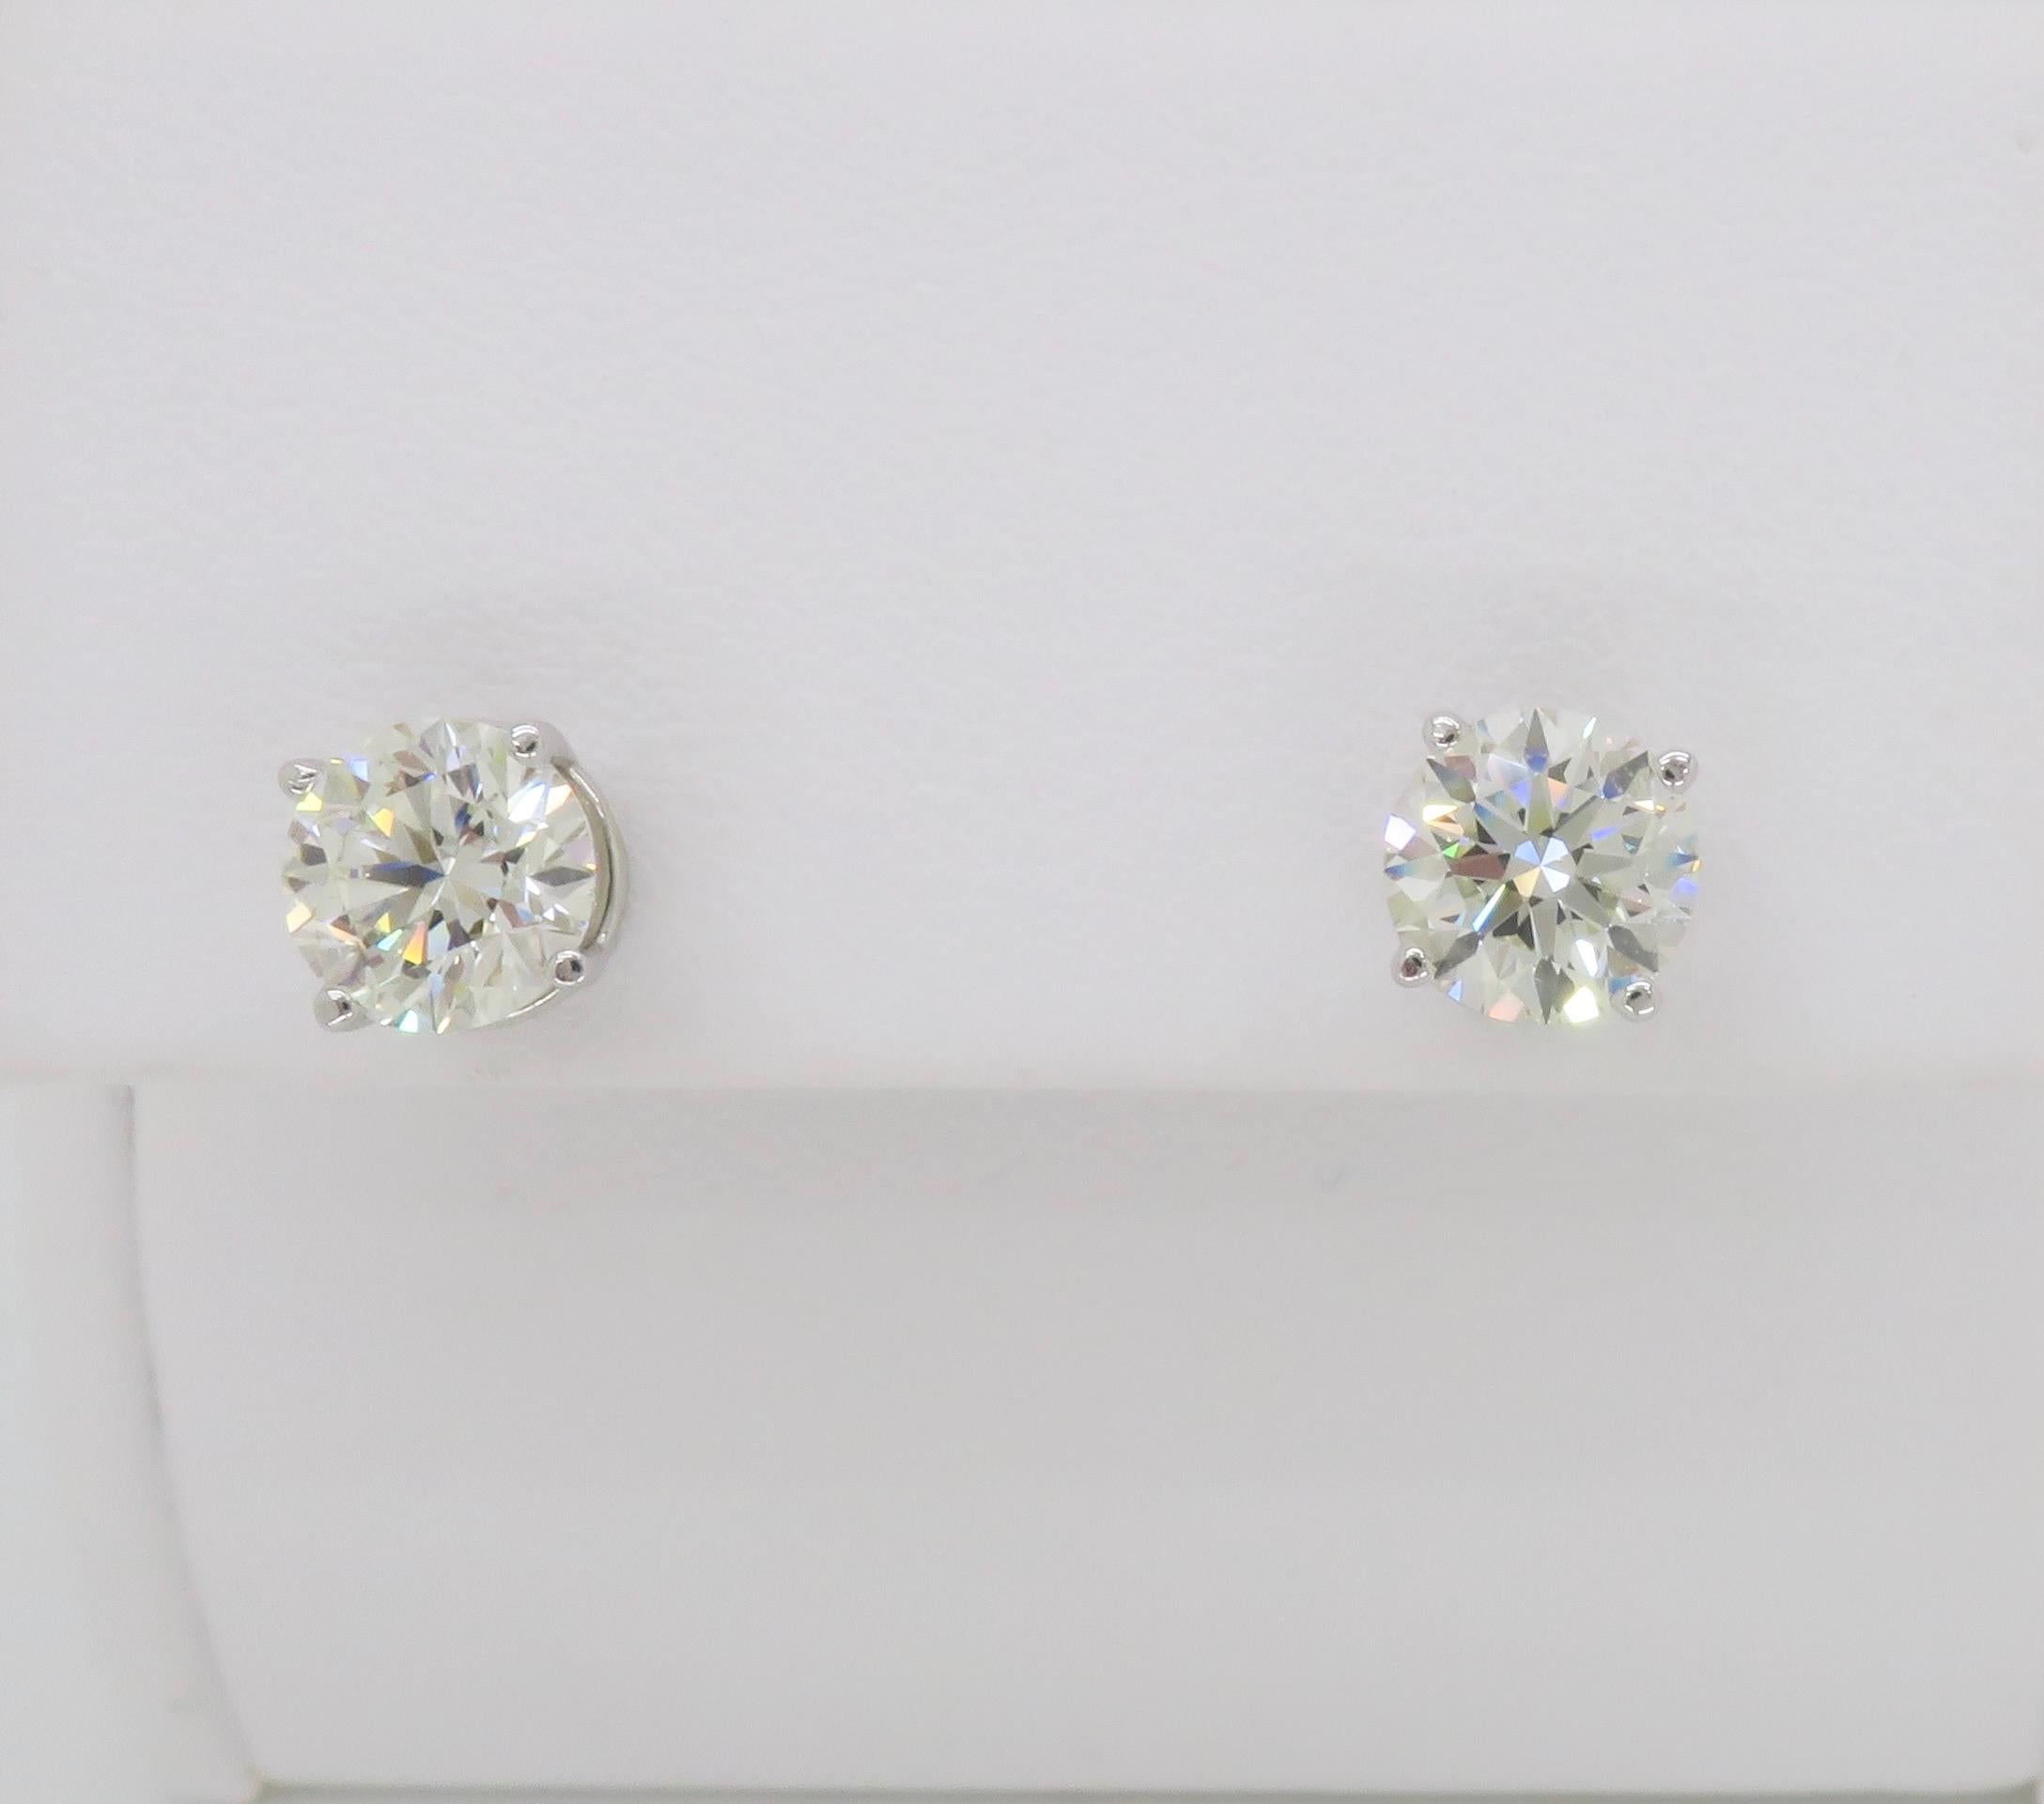 Stunning diamond stud earrings set in 14k white gold baskets, totaling 1.83ctw. 

Total Diamond Carat Weight: 1.83CTW (.91ct & .92ct)
Diamond Cut: Round Brilliant Cut 
Diamond Color: J-K
Diamond Clarity: VS1-VS2
Metal: 14k White Gold
Stamped: